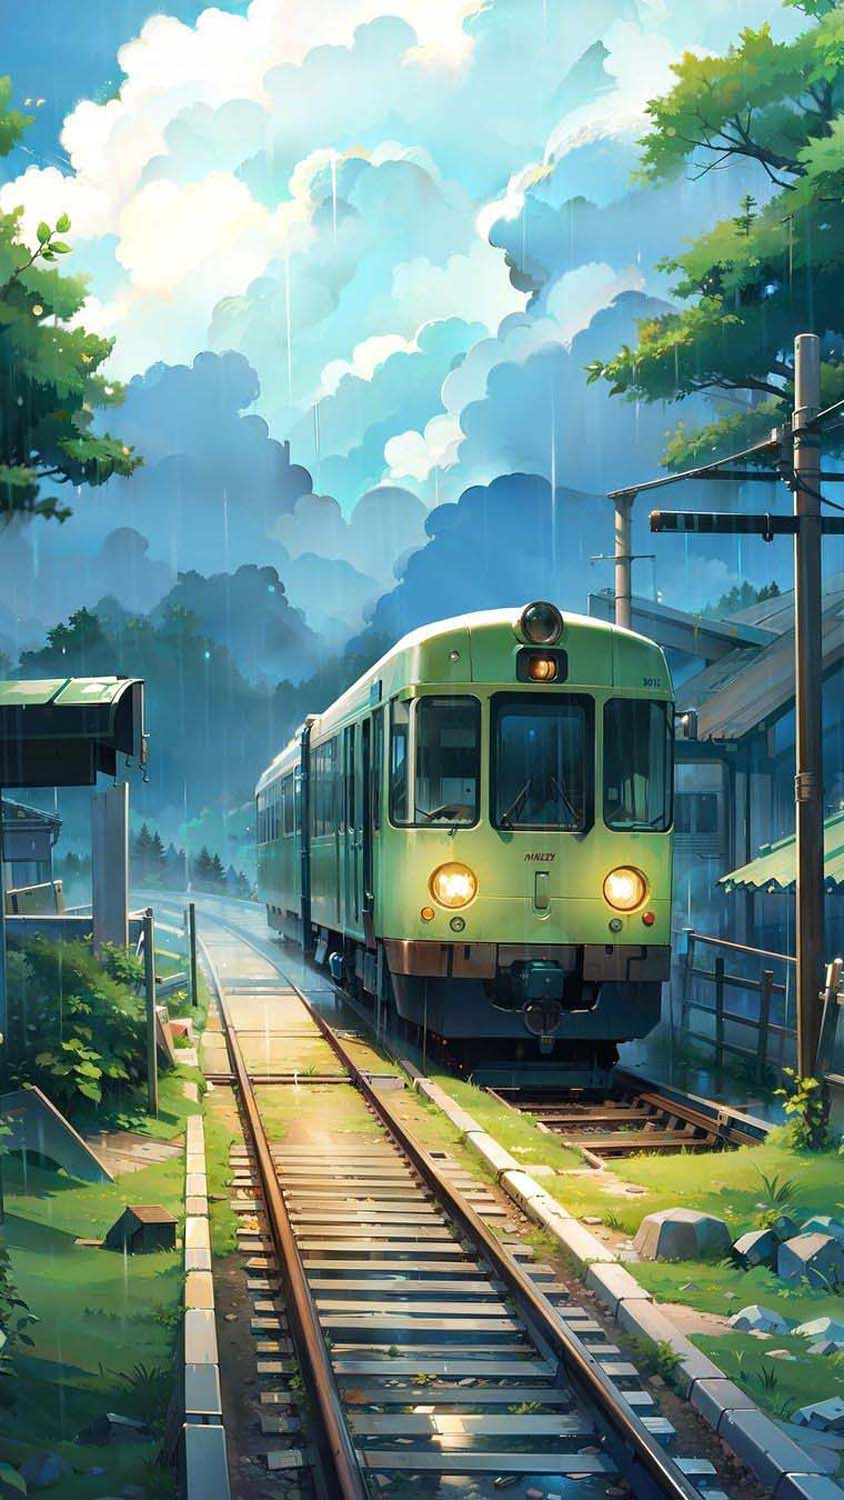 511973 1920x1080 train night city anime 5 centimeters per second wallpaper  JPG 232 kB - Rare Gallery HD Wallpapers